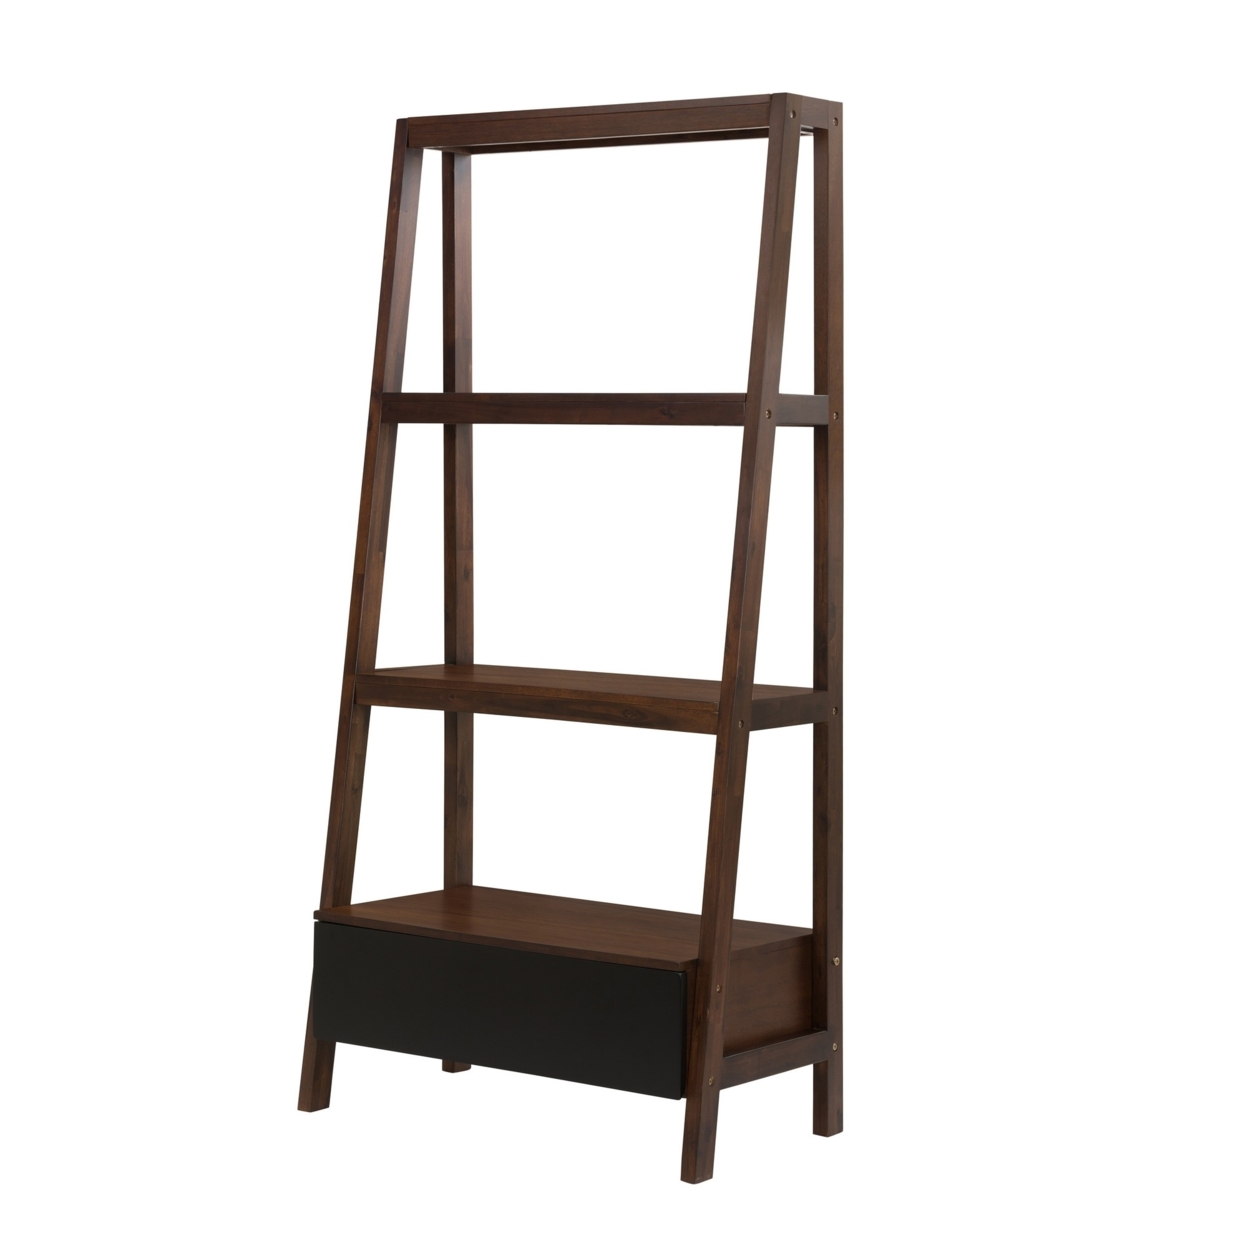 68 Inch Tall Shelf Unit, 2 Ladder Style Shelves, 1 Drawer, Espresso Brown- Saltoro Sherpi